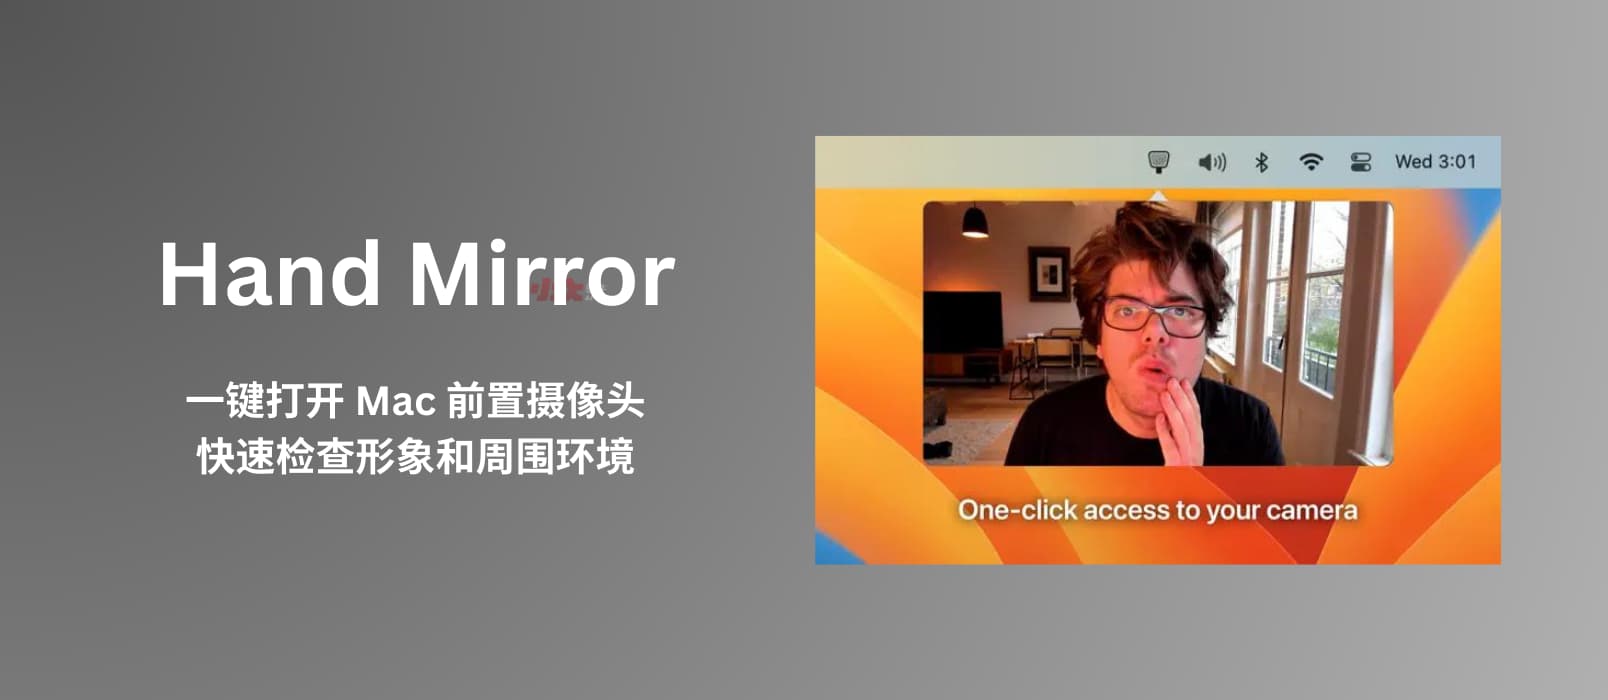 Hand Mirror - 一键打开 Mac 前置摄像头，快速检查形象和周围环境